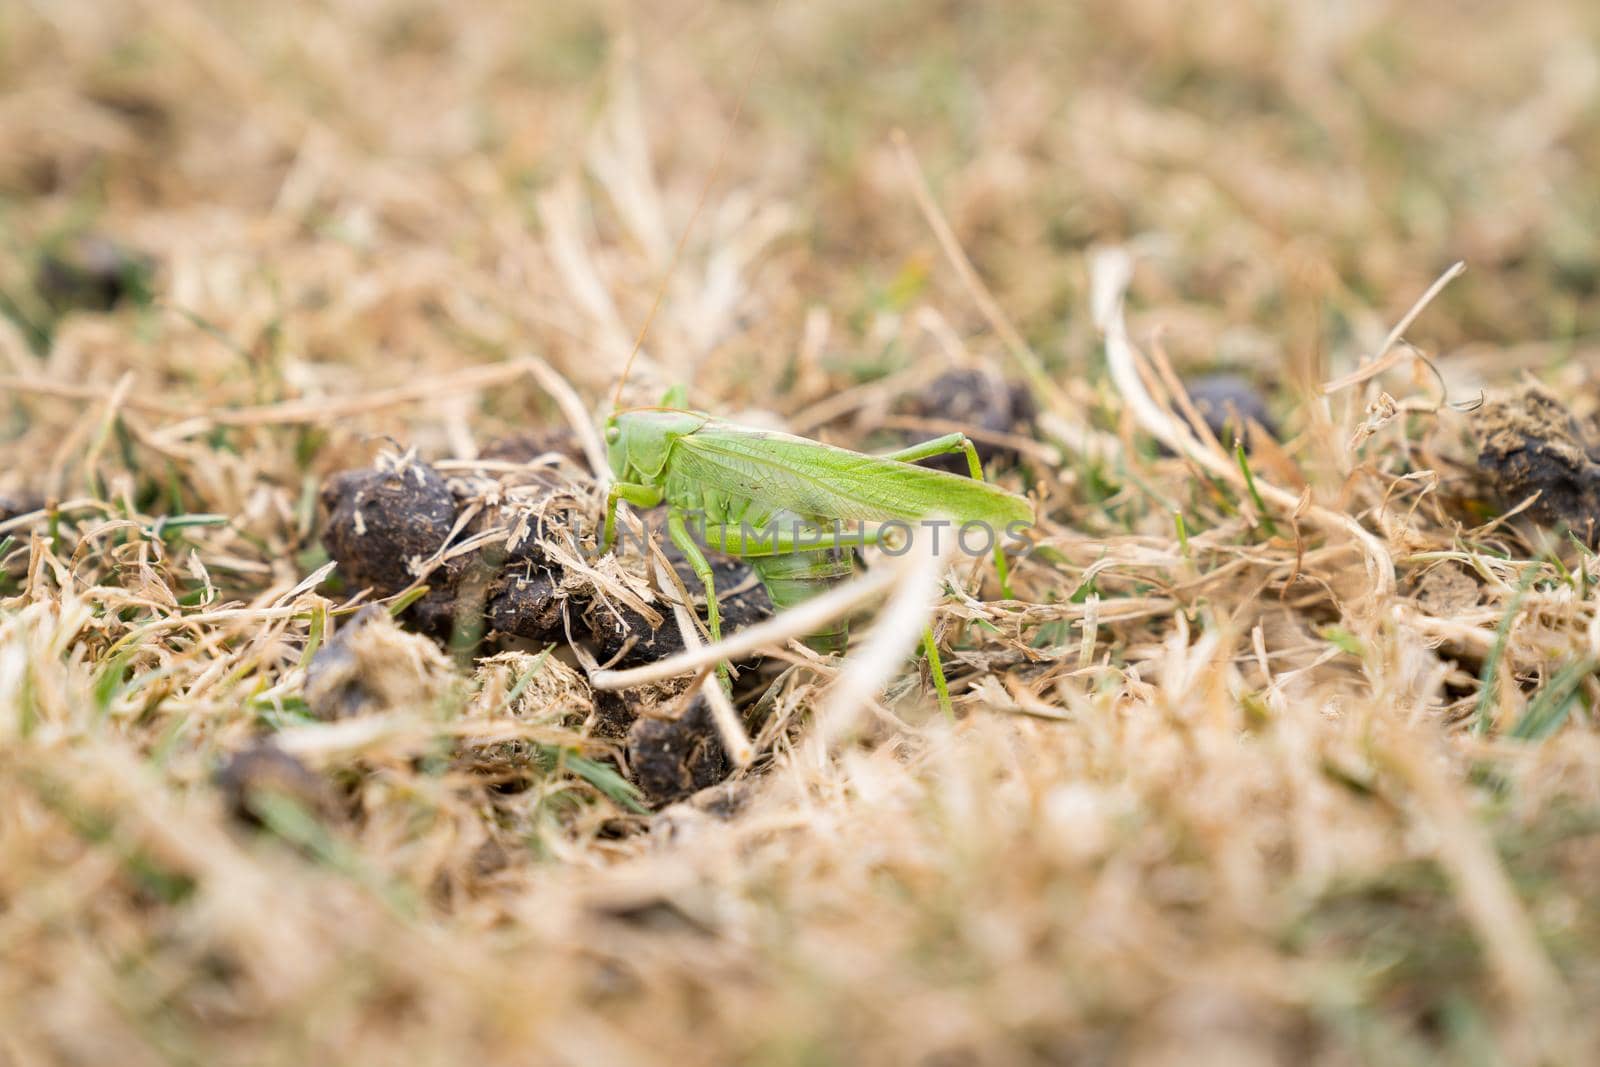 Large green grasshopper sitting in the dry grass at maiden Castle Dorchester by LeoniekvanderVliet